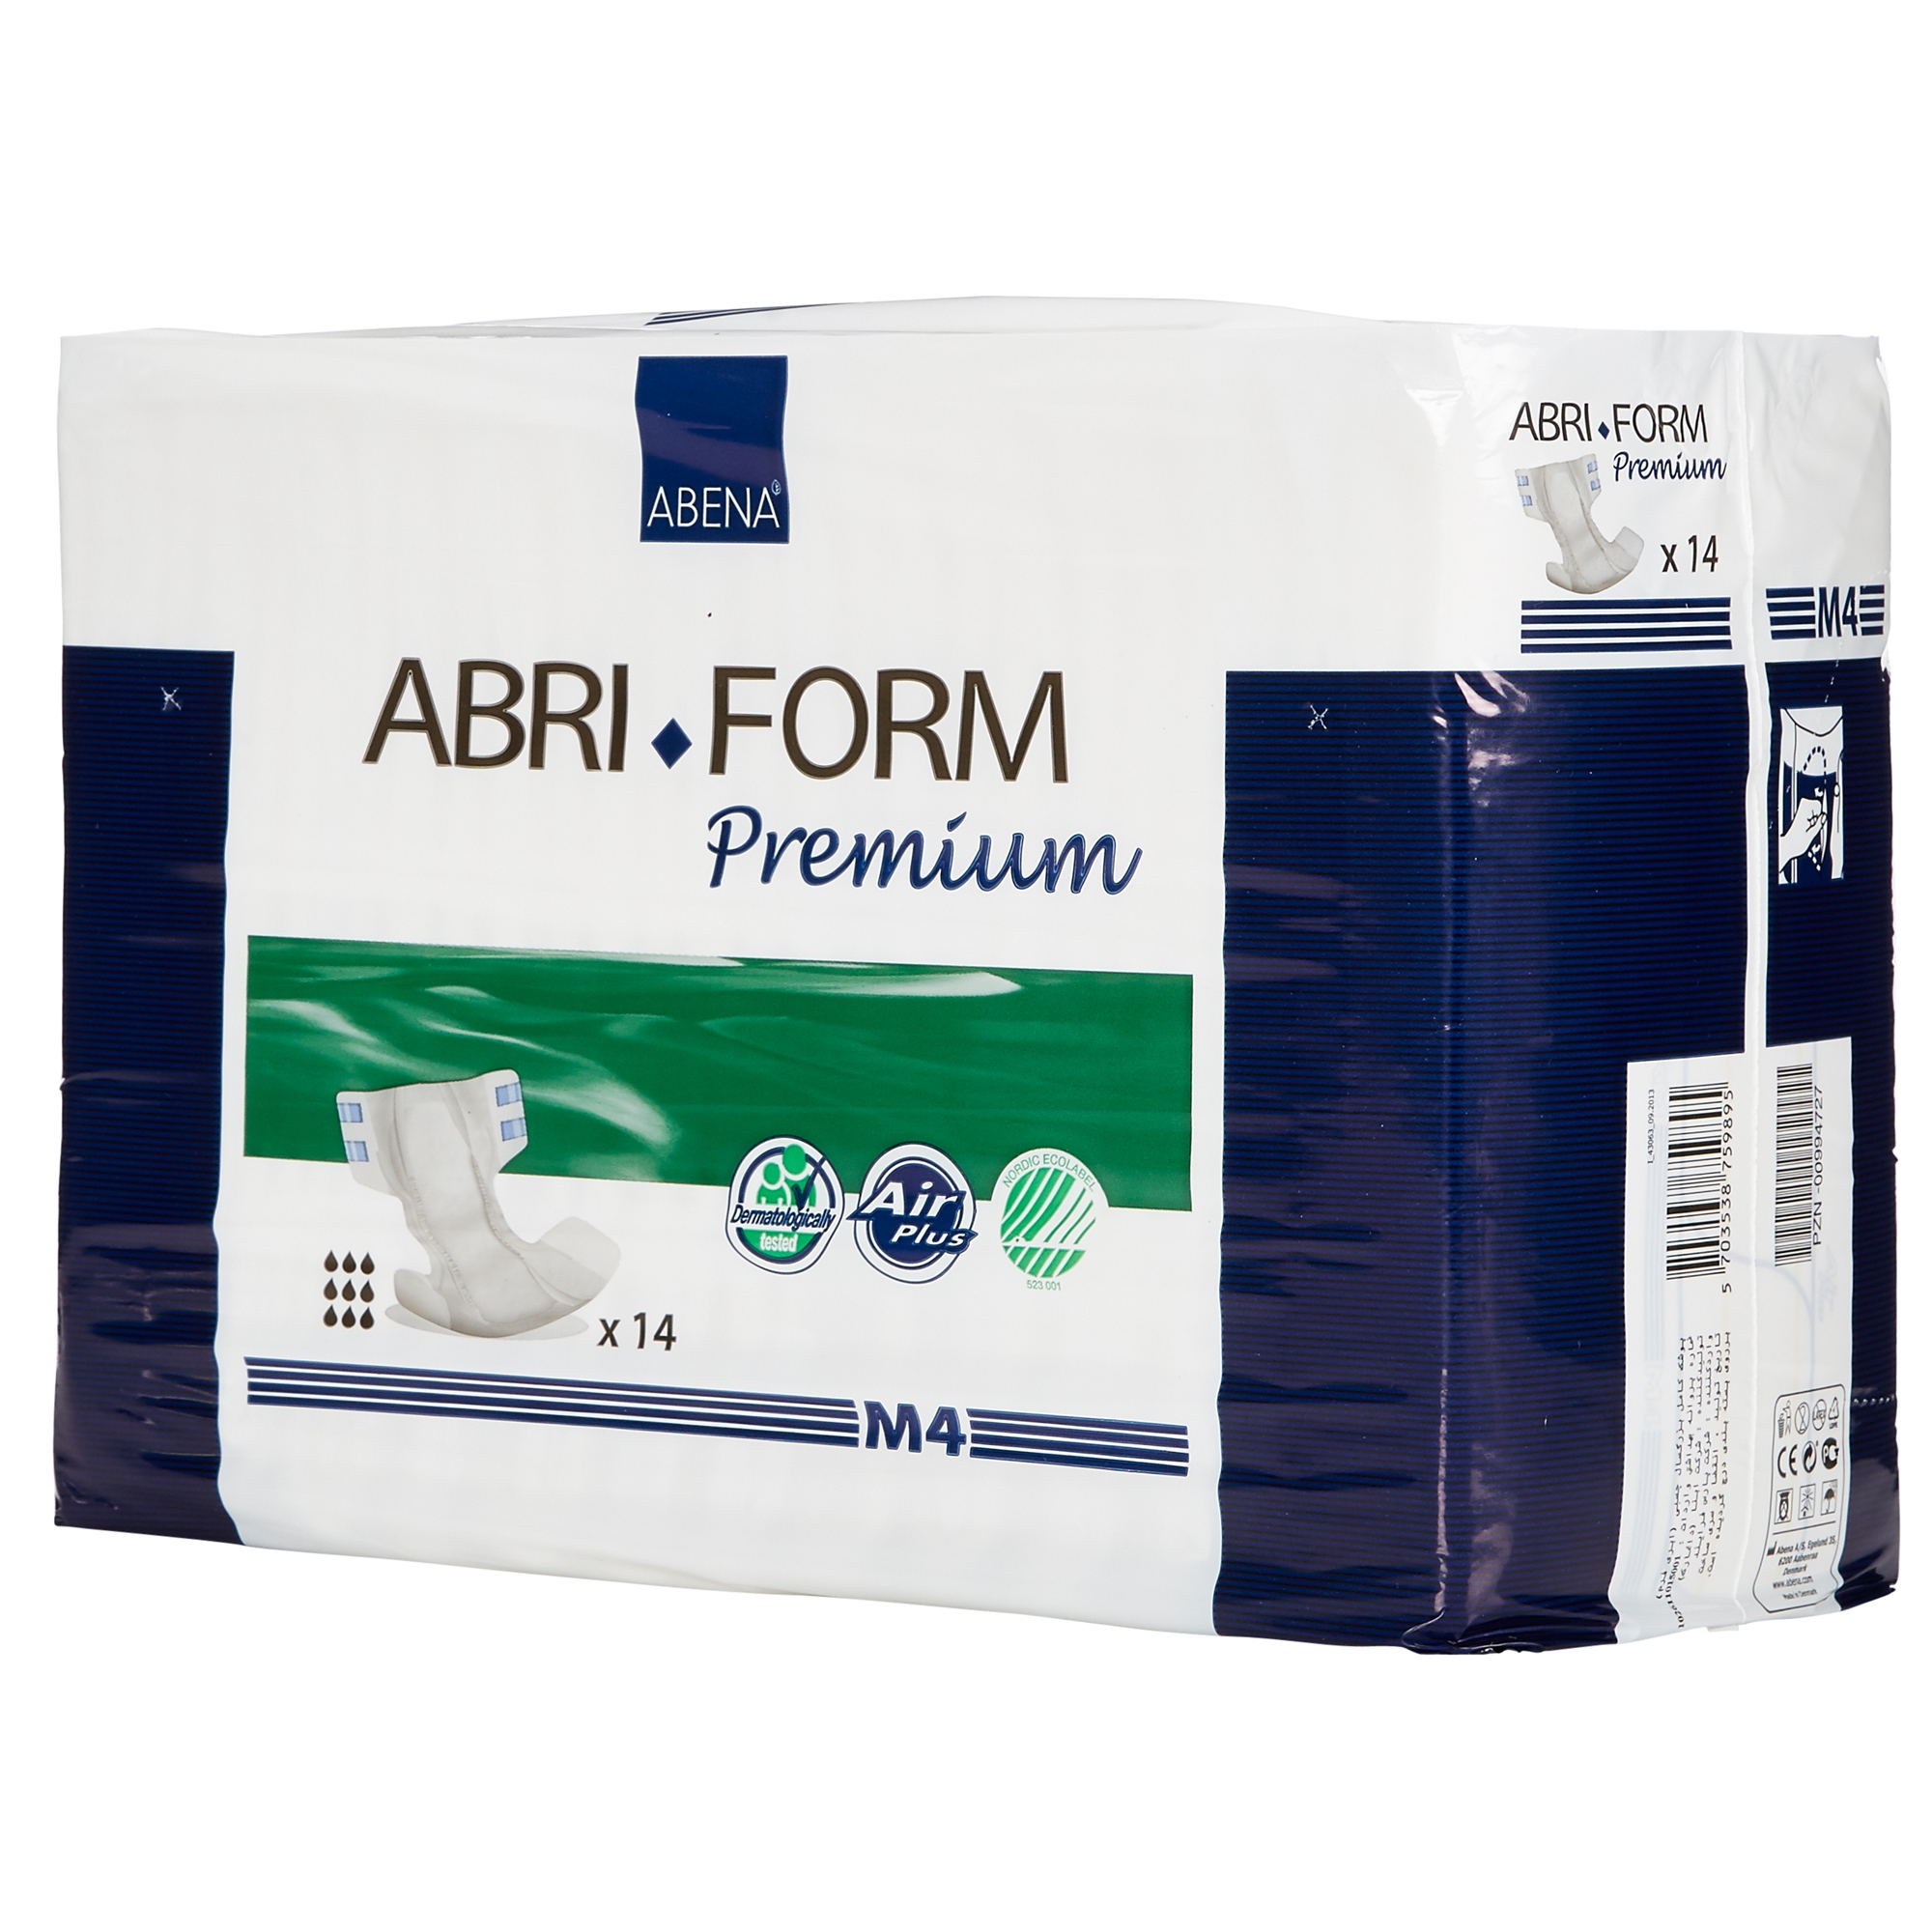 Abena Abri-Form Premium Incontinence Briefs, Medium, M4, 56 Count (4 Packs of 14) - image 3 of 6